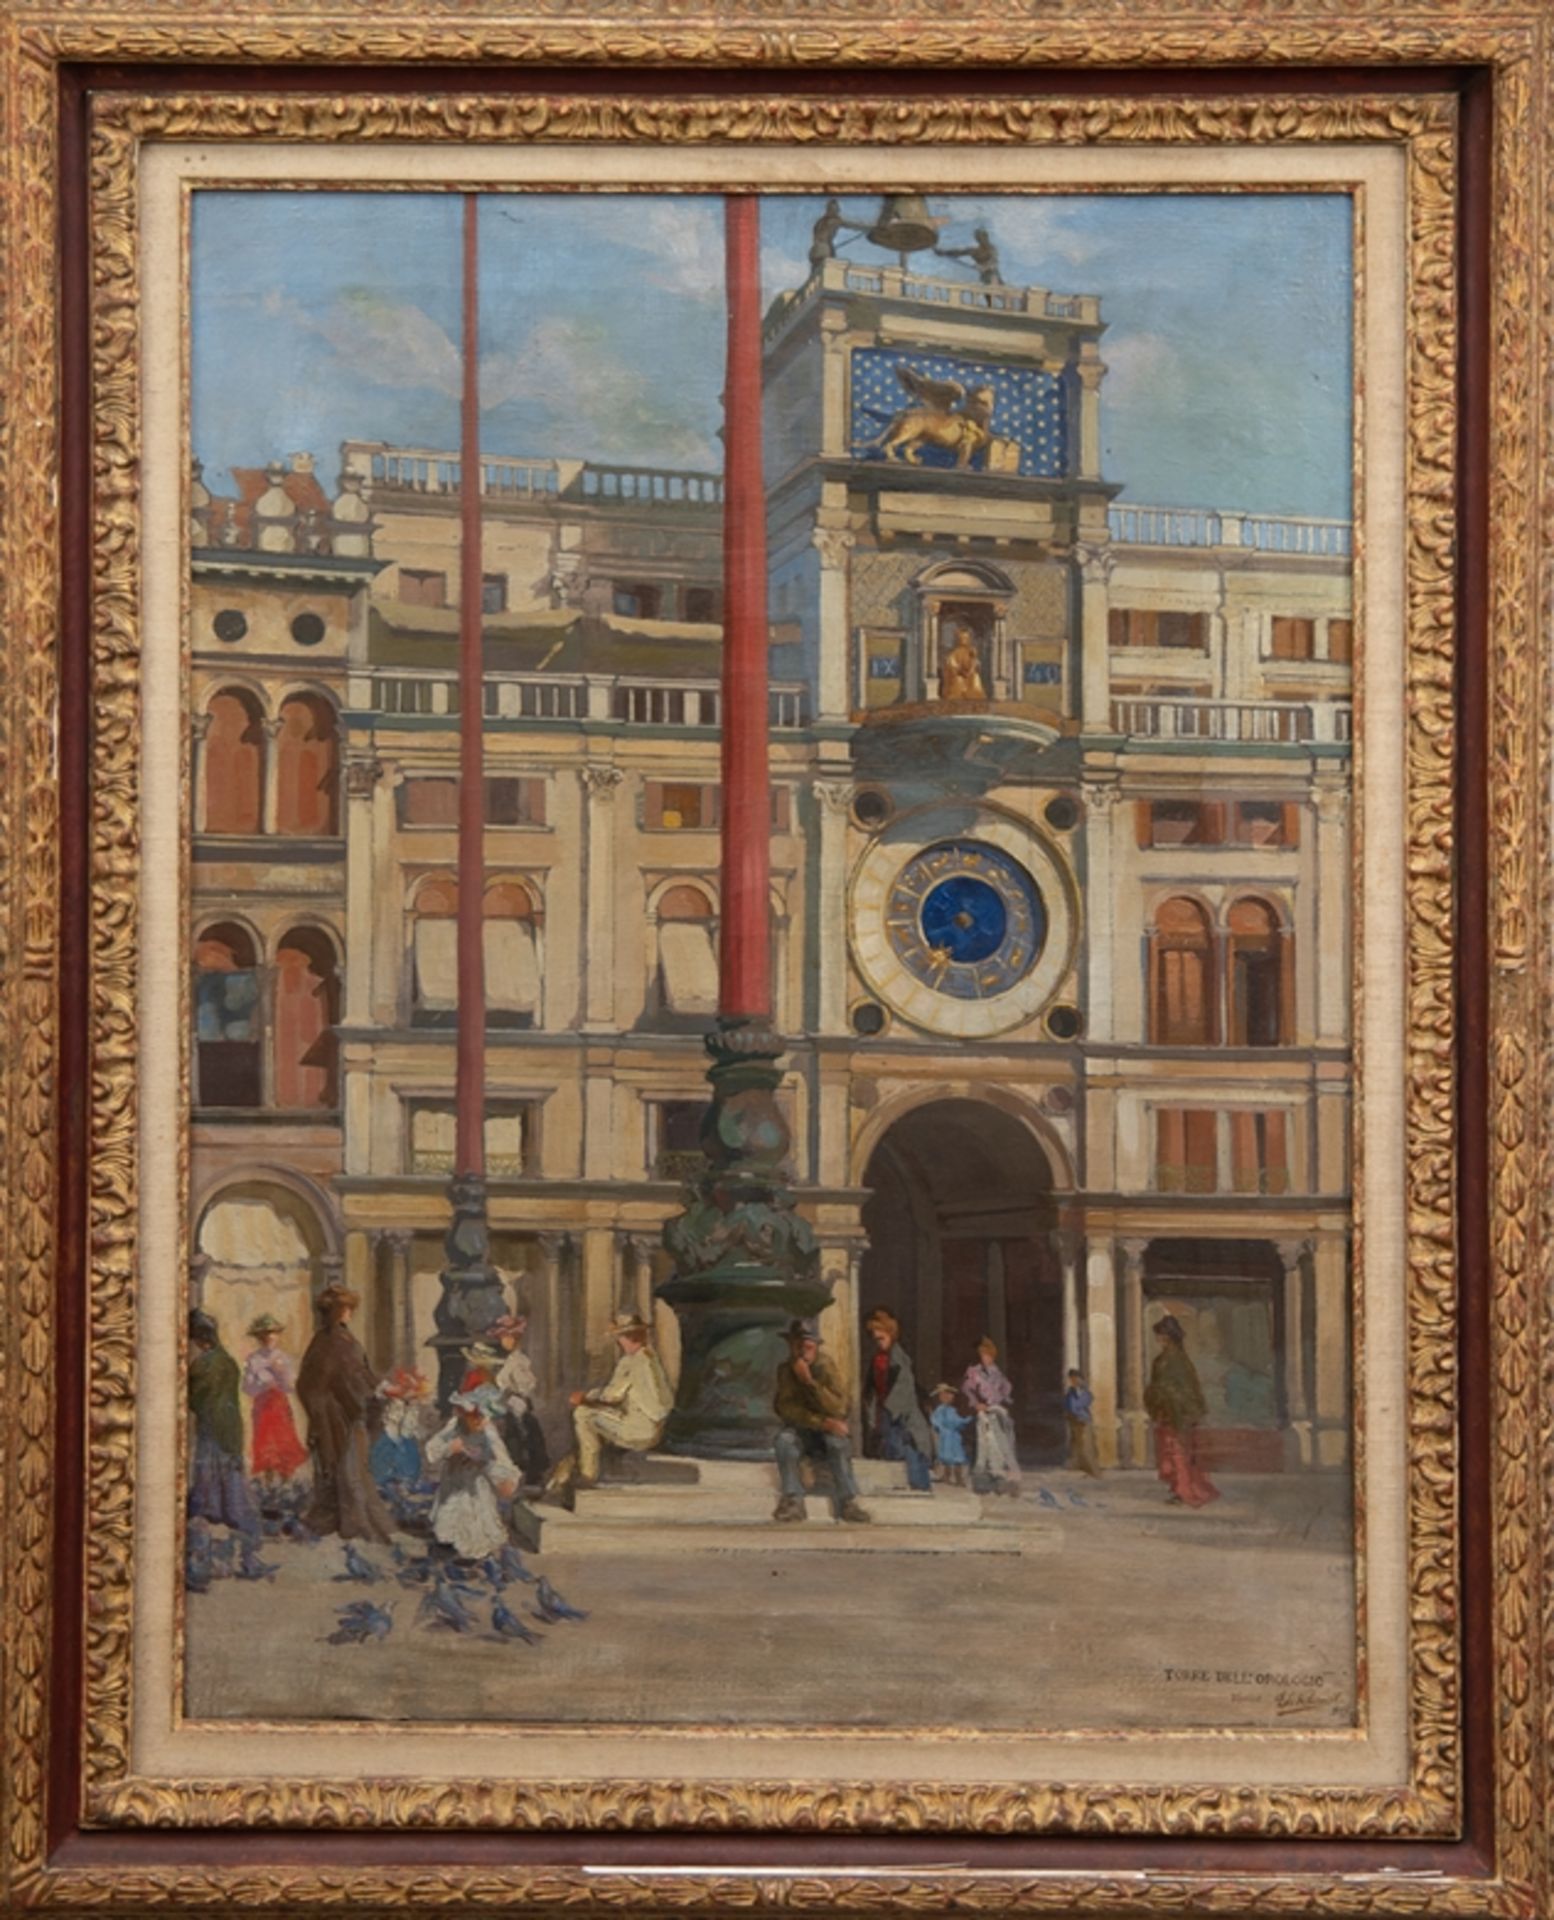 Kunert, E. de (Maler um 1900) "Torre dell´ Orologio-Uhrturm von San Marco", Öl/ Lw., 5 kl. Hinterle